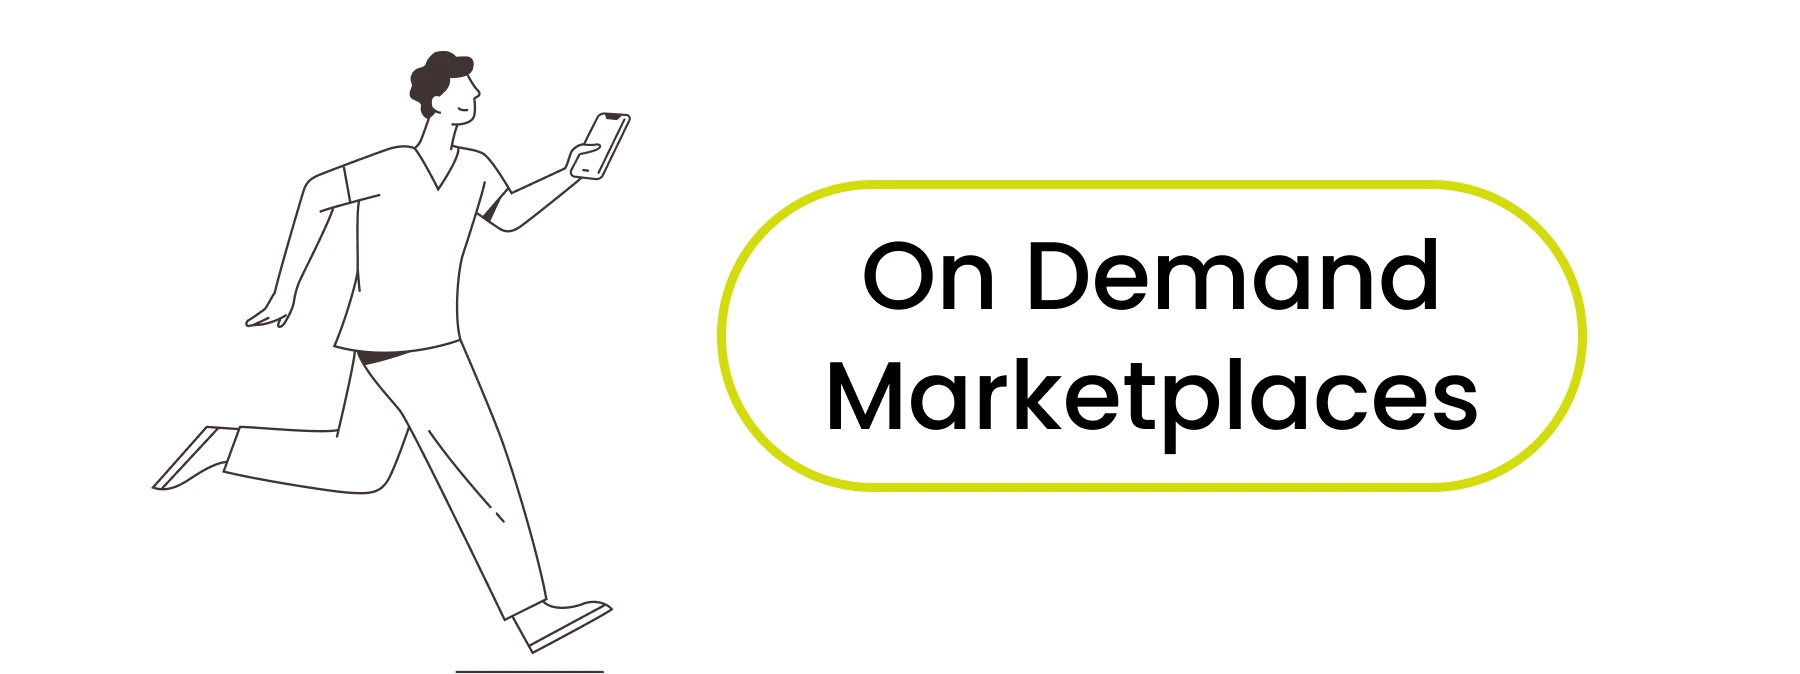 On-Demand Marketplaces